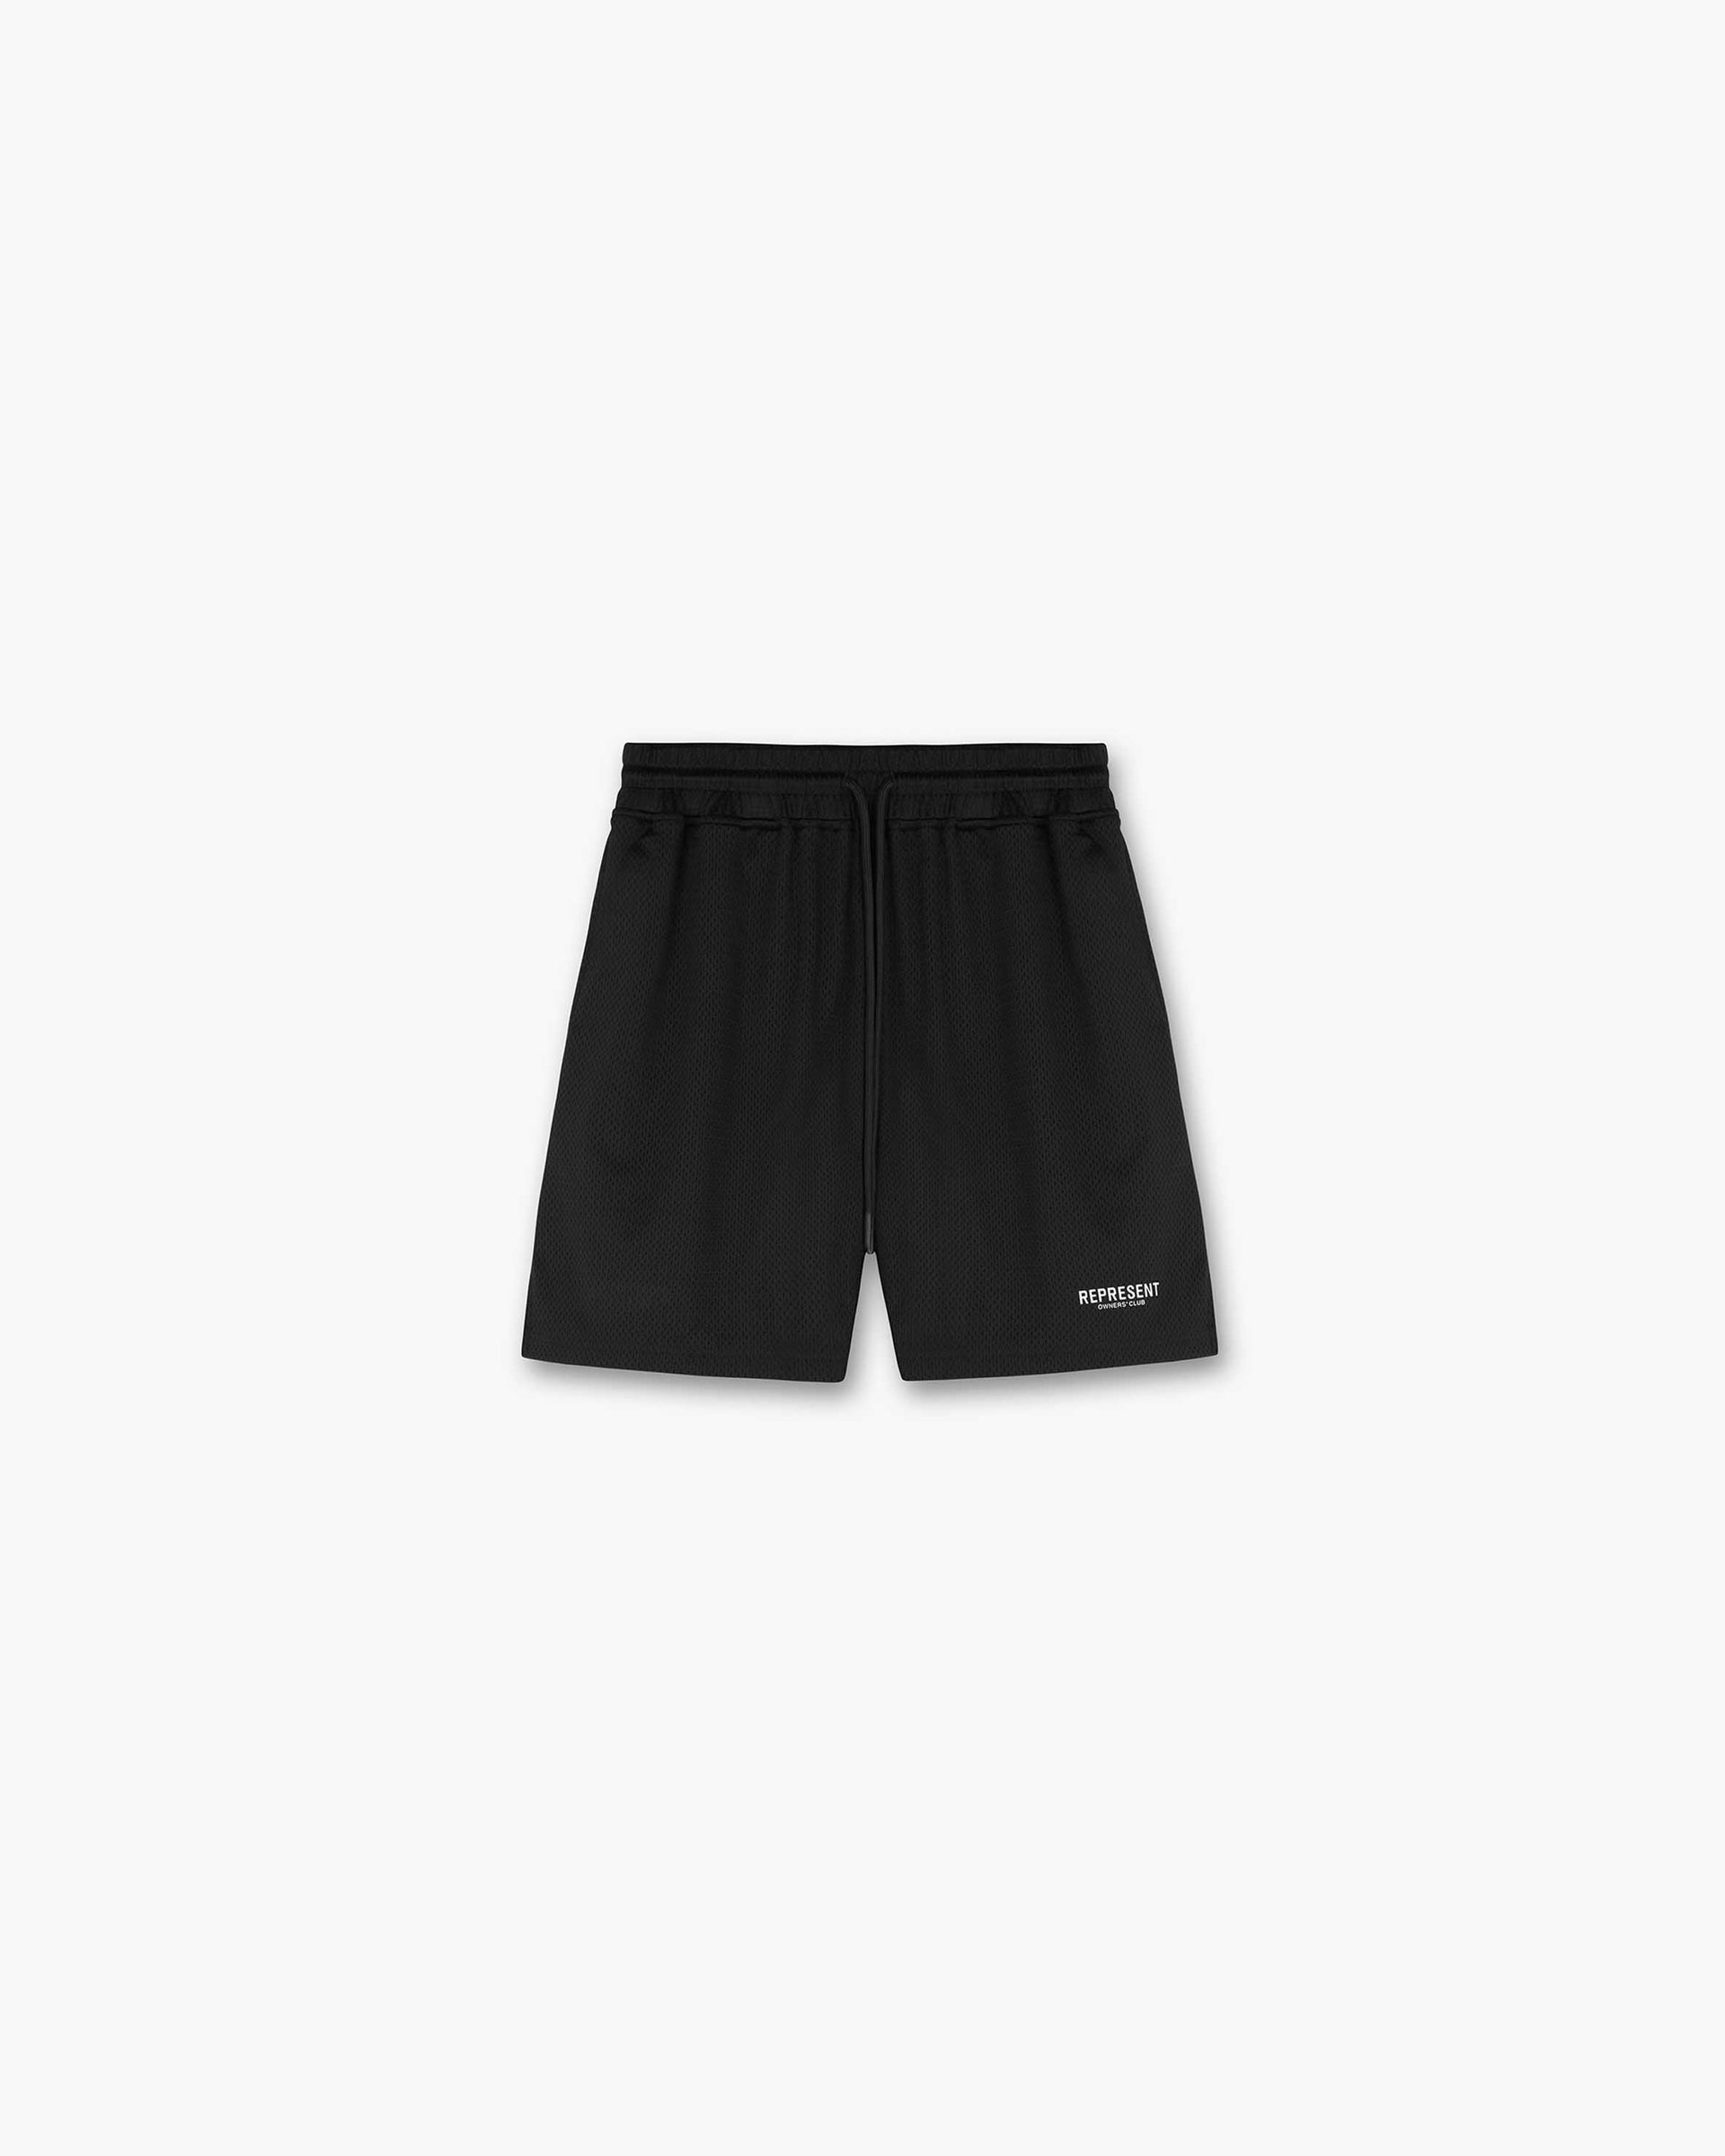 Green Shorts, Owners' Club Mesh Shorts